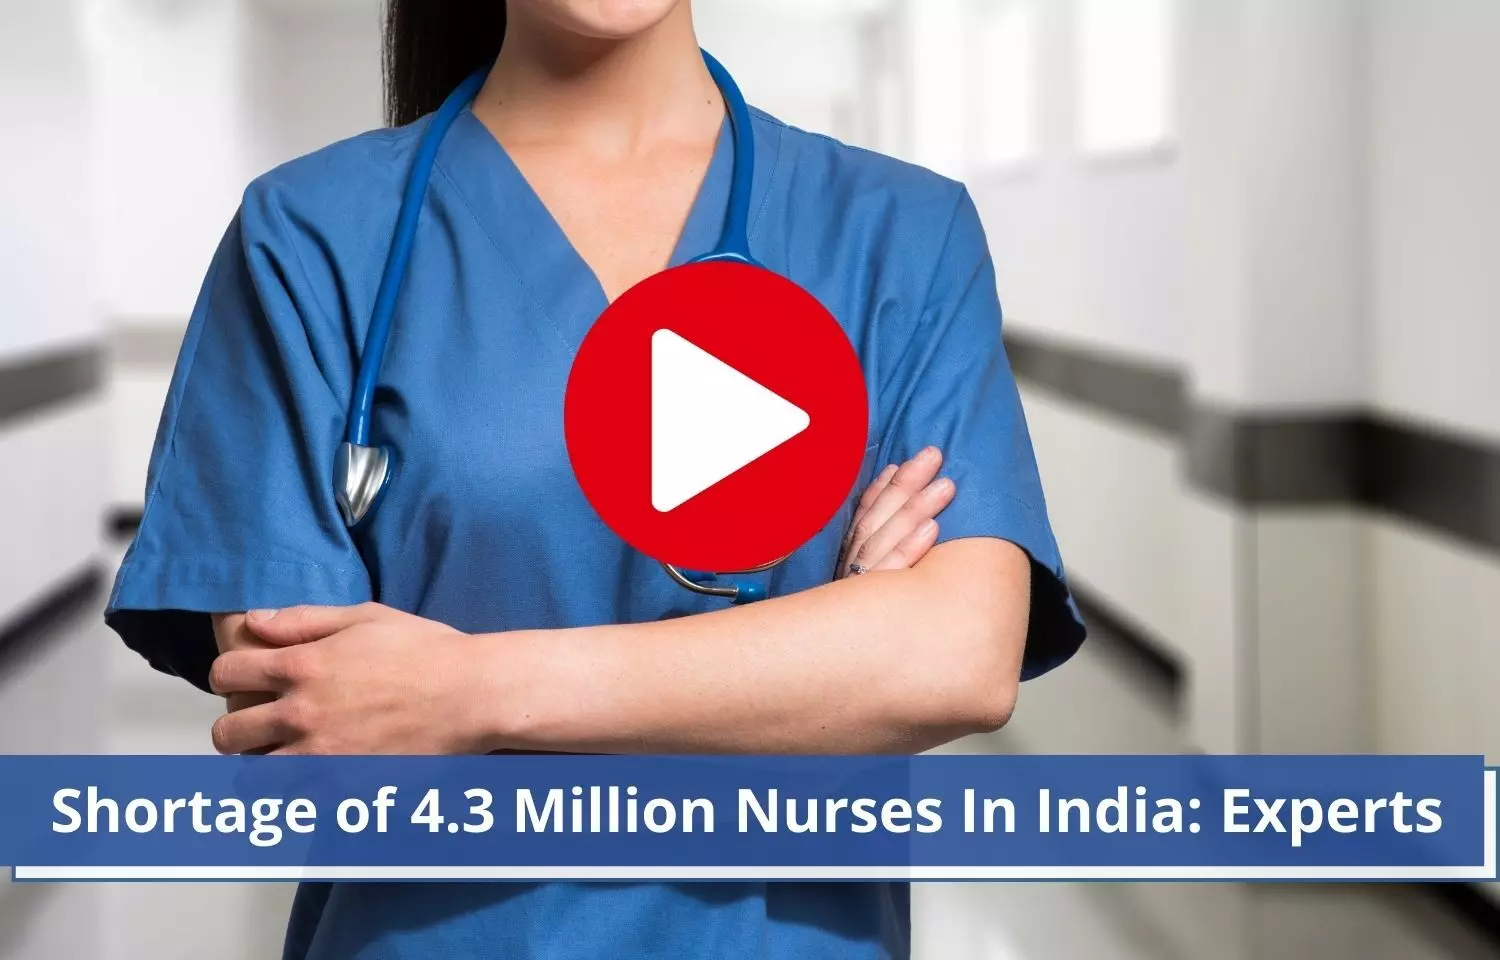 Shortage of 4.3 million nurses in India says experts